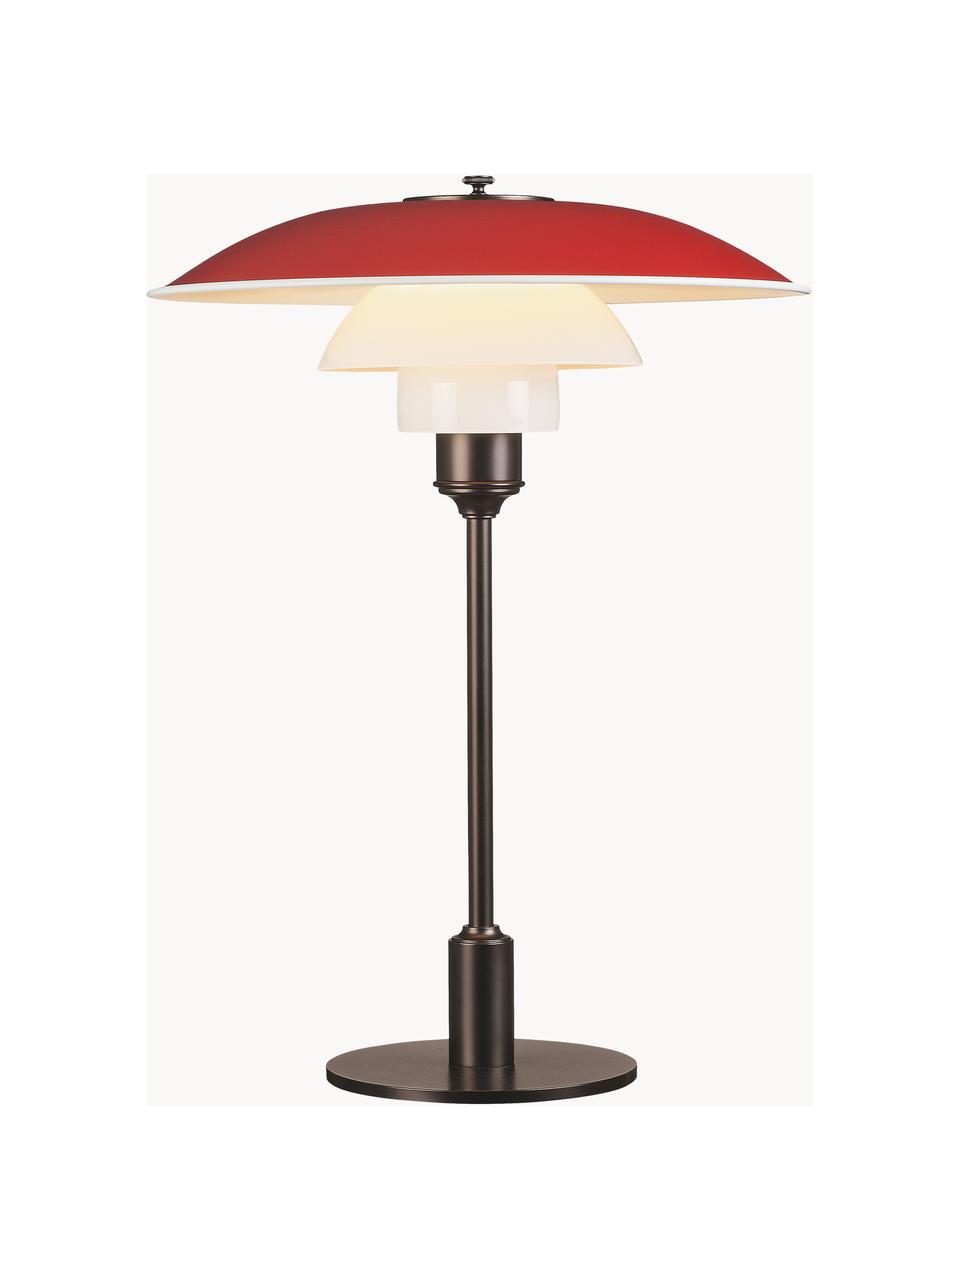 Grosse Tischlampe PH 3½-2½, mundgeblasen, Lampenschirm: Aluminium, beschichtet, O, Rot, Kupfer, Ø 33 x H 45 cm